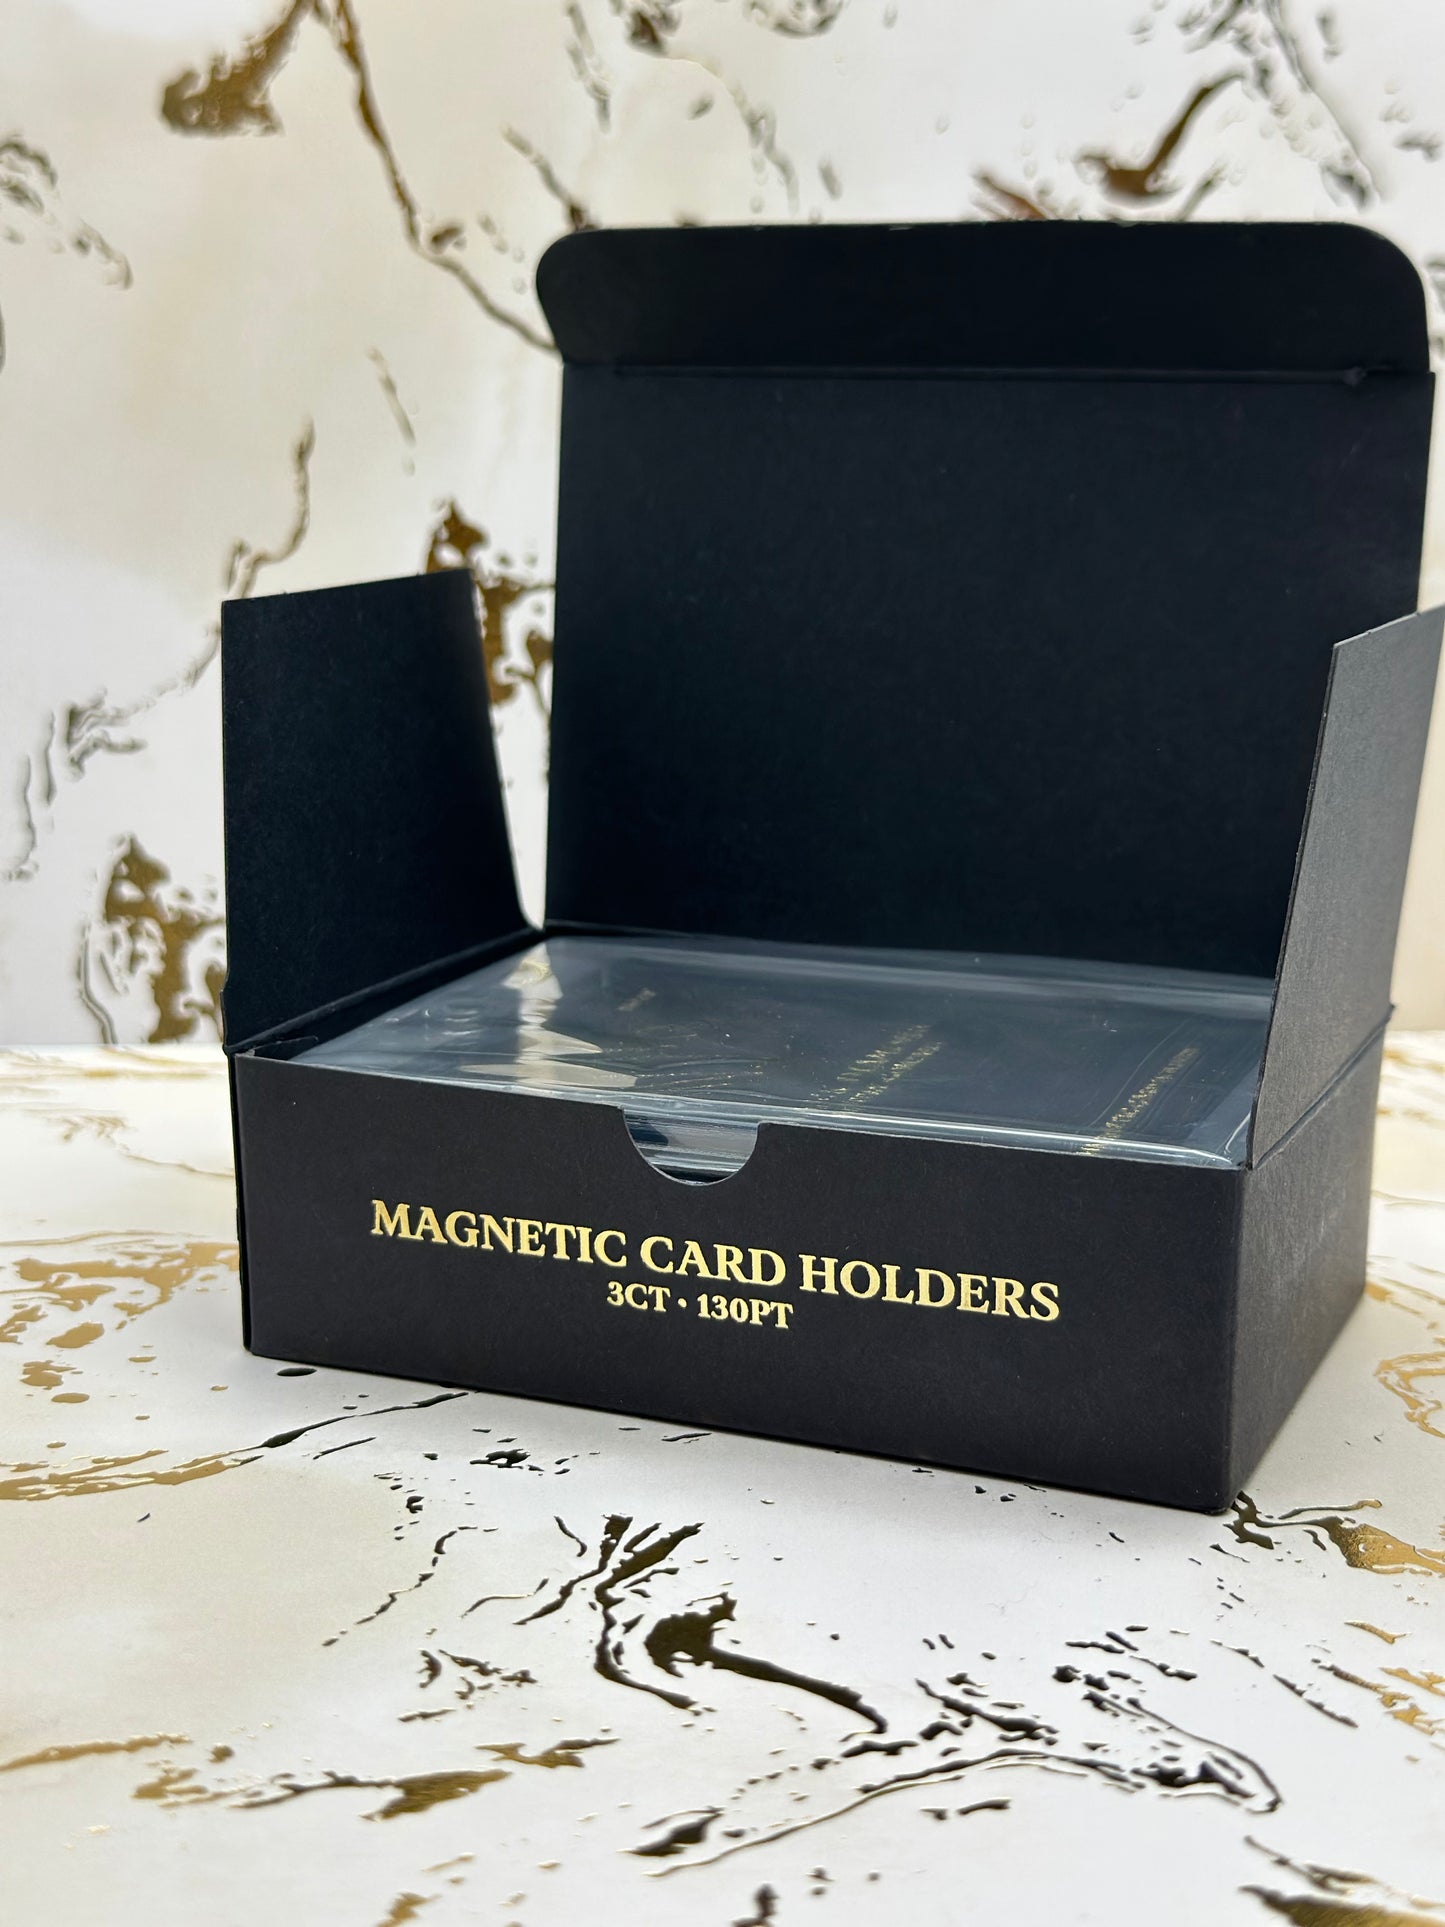 130 PT Magnetic Card Holders (3pcs)